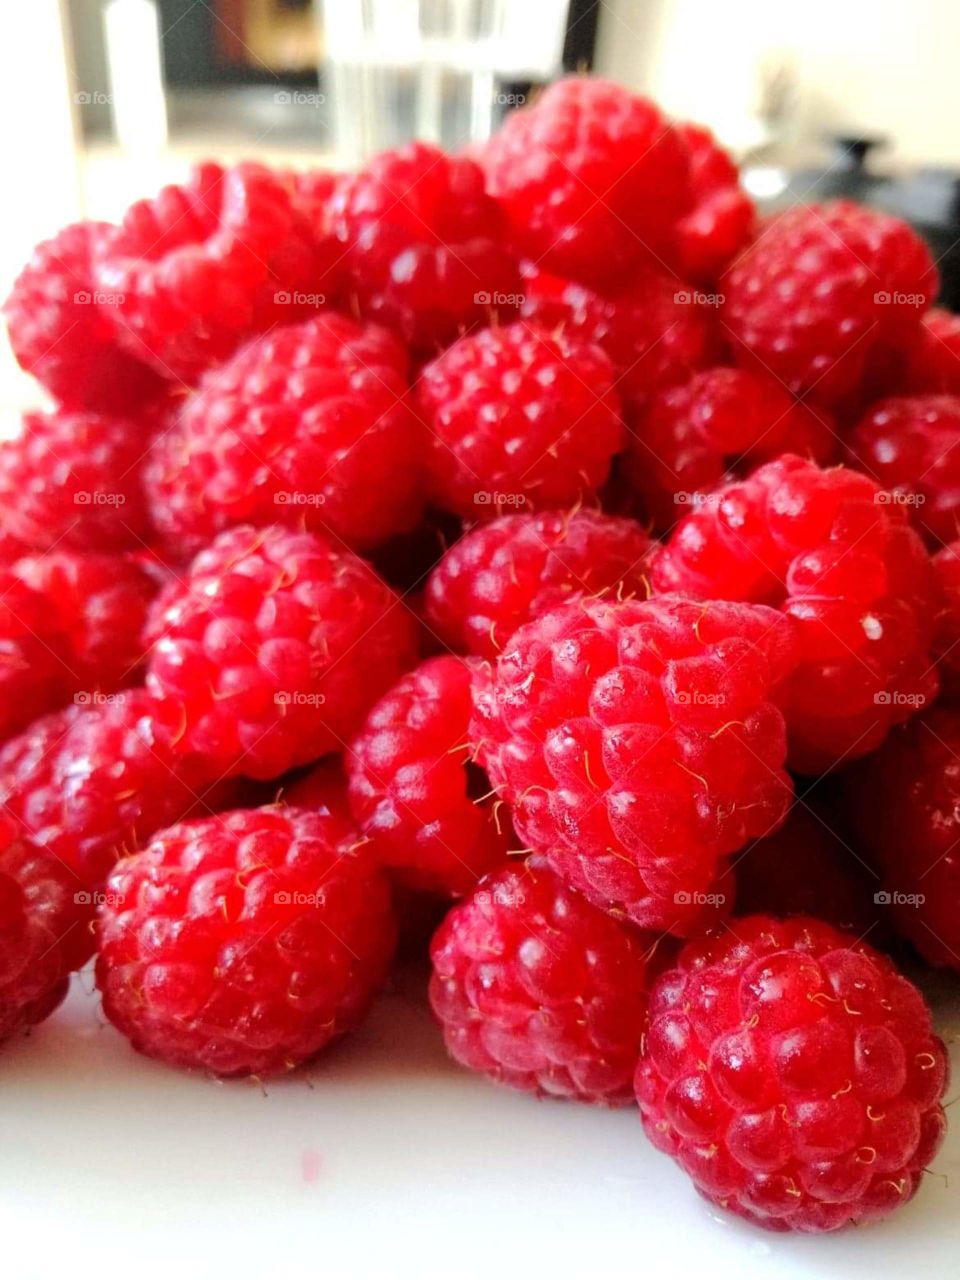 Sweet juicy raspberry